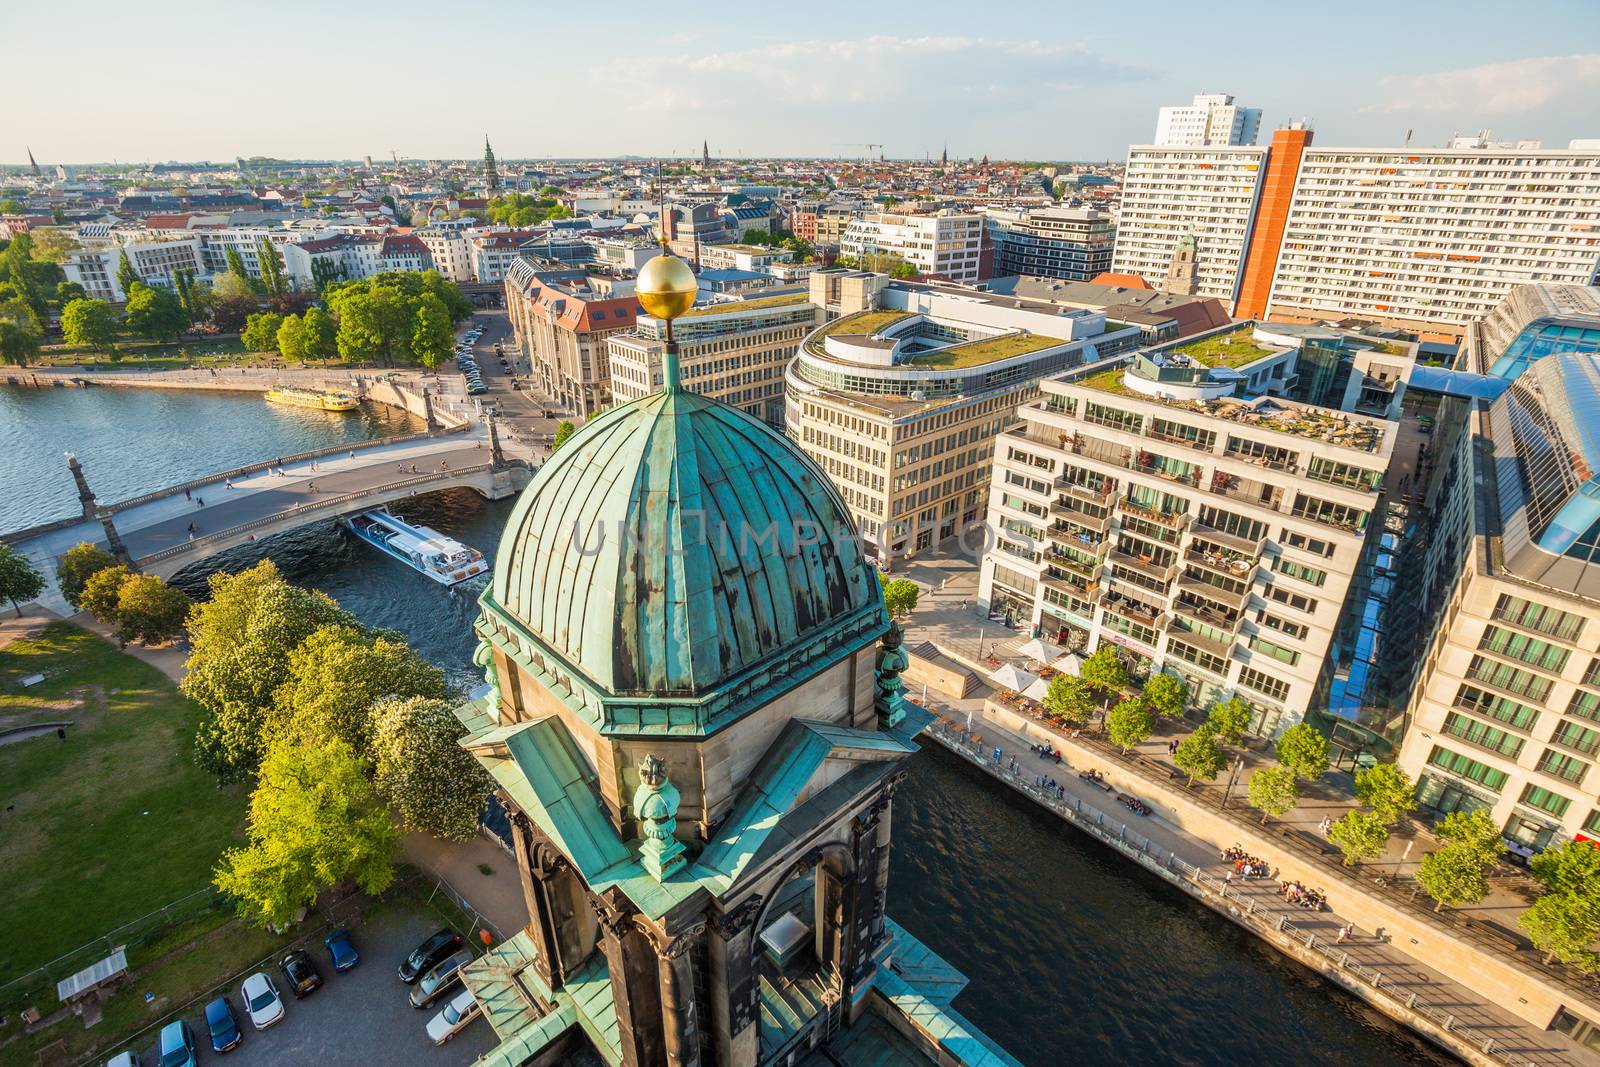 The Berliner Dom, River Spree, and Hackescher Markt by edan